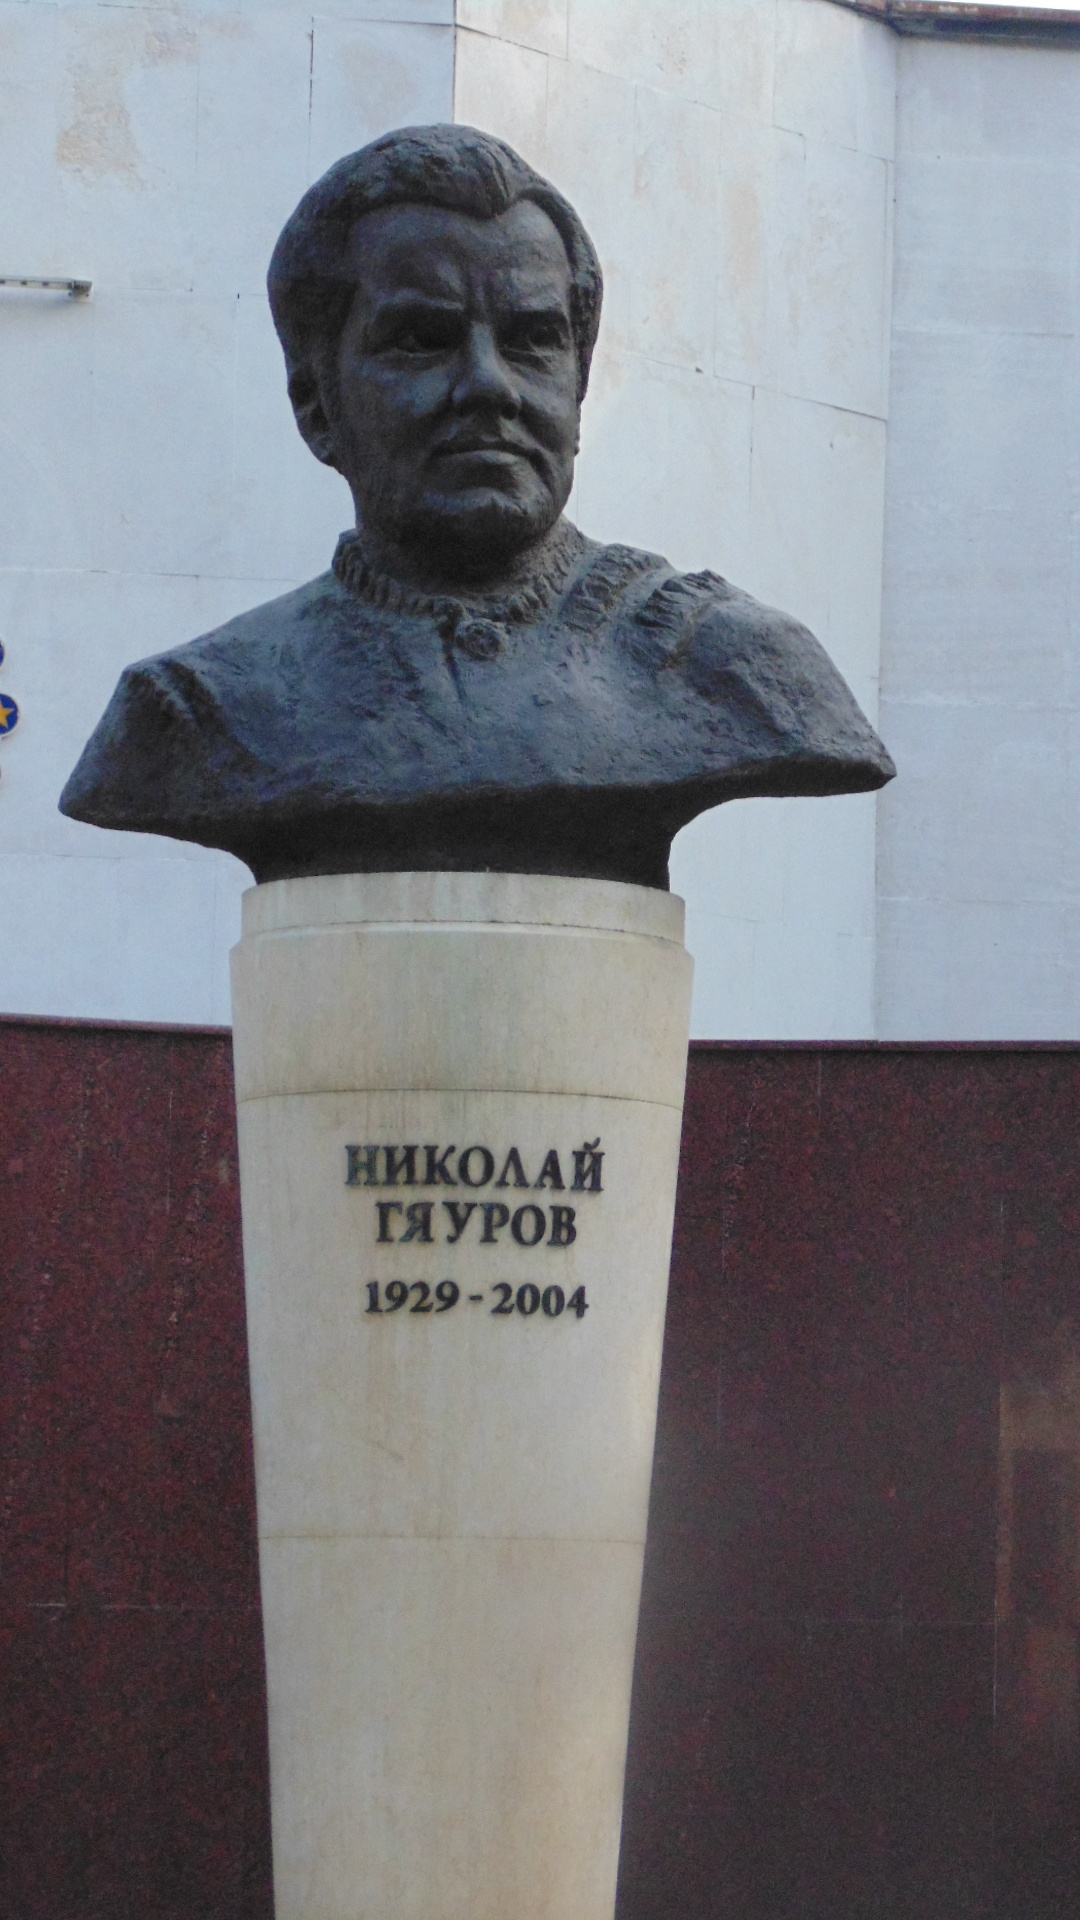 Николай Гяуров (Николай Гиауров) |